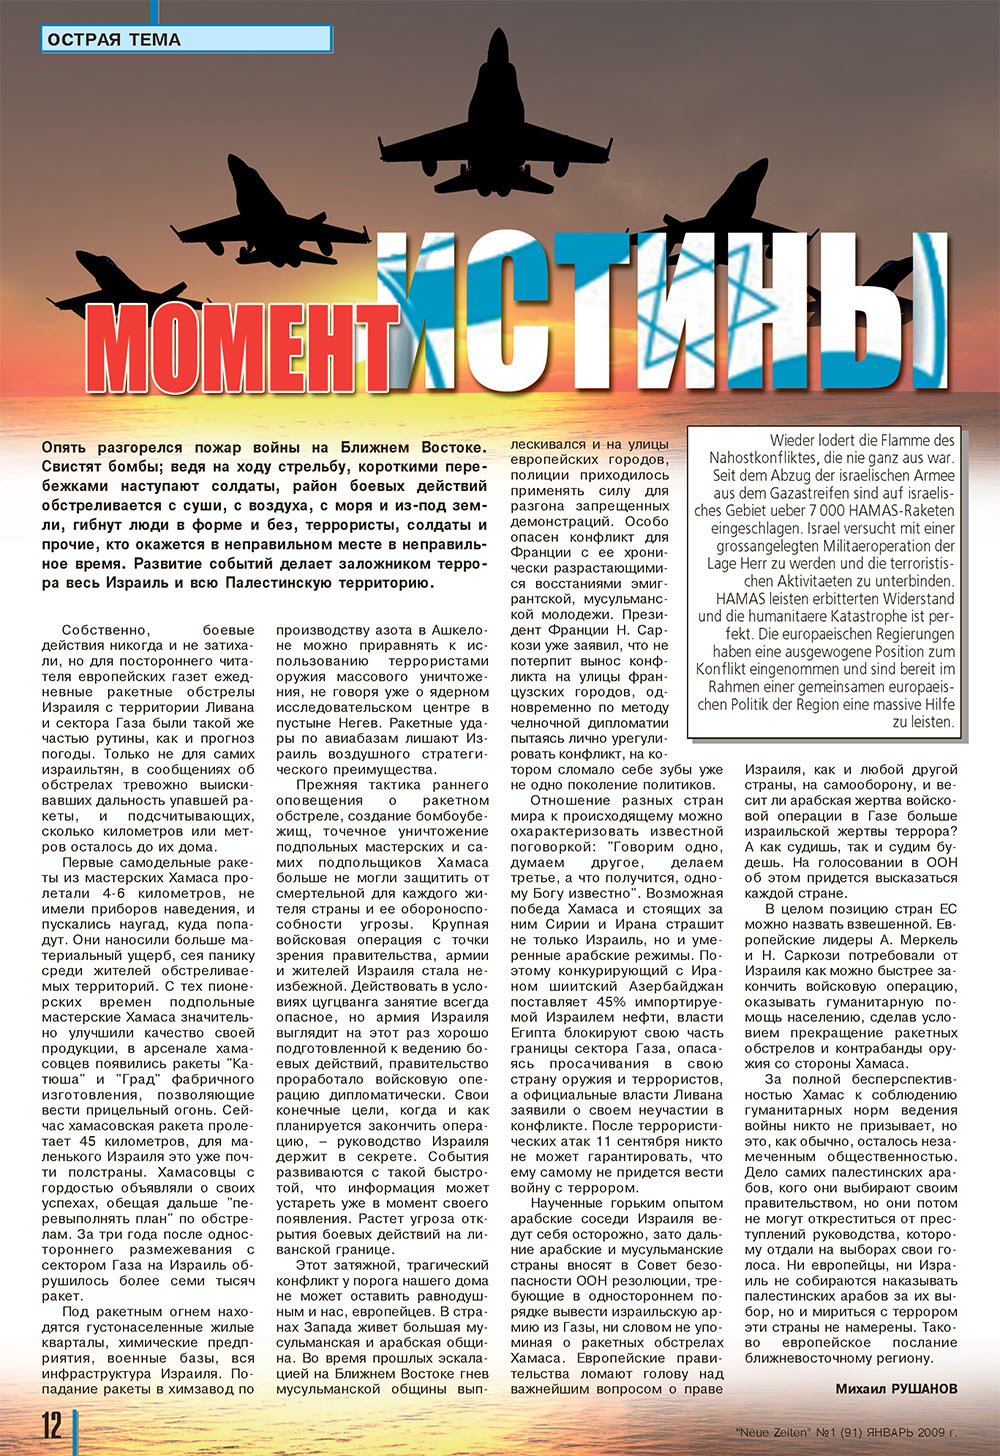 Neue Zeiten (журнал). 2009 год, номер 1, стр. 12